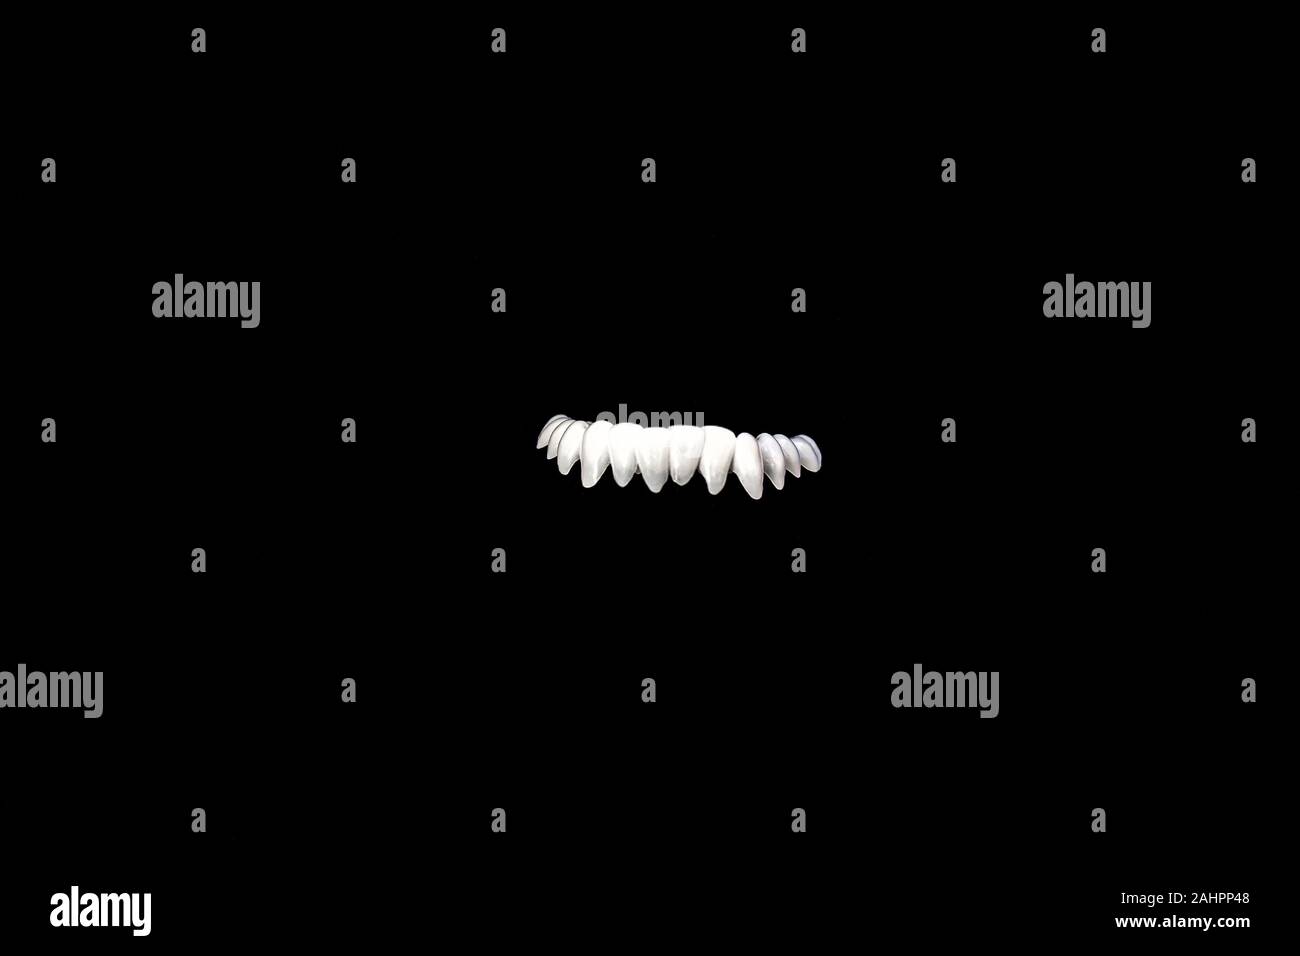 A 3d visual of lower human teeth Stock Photo